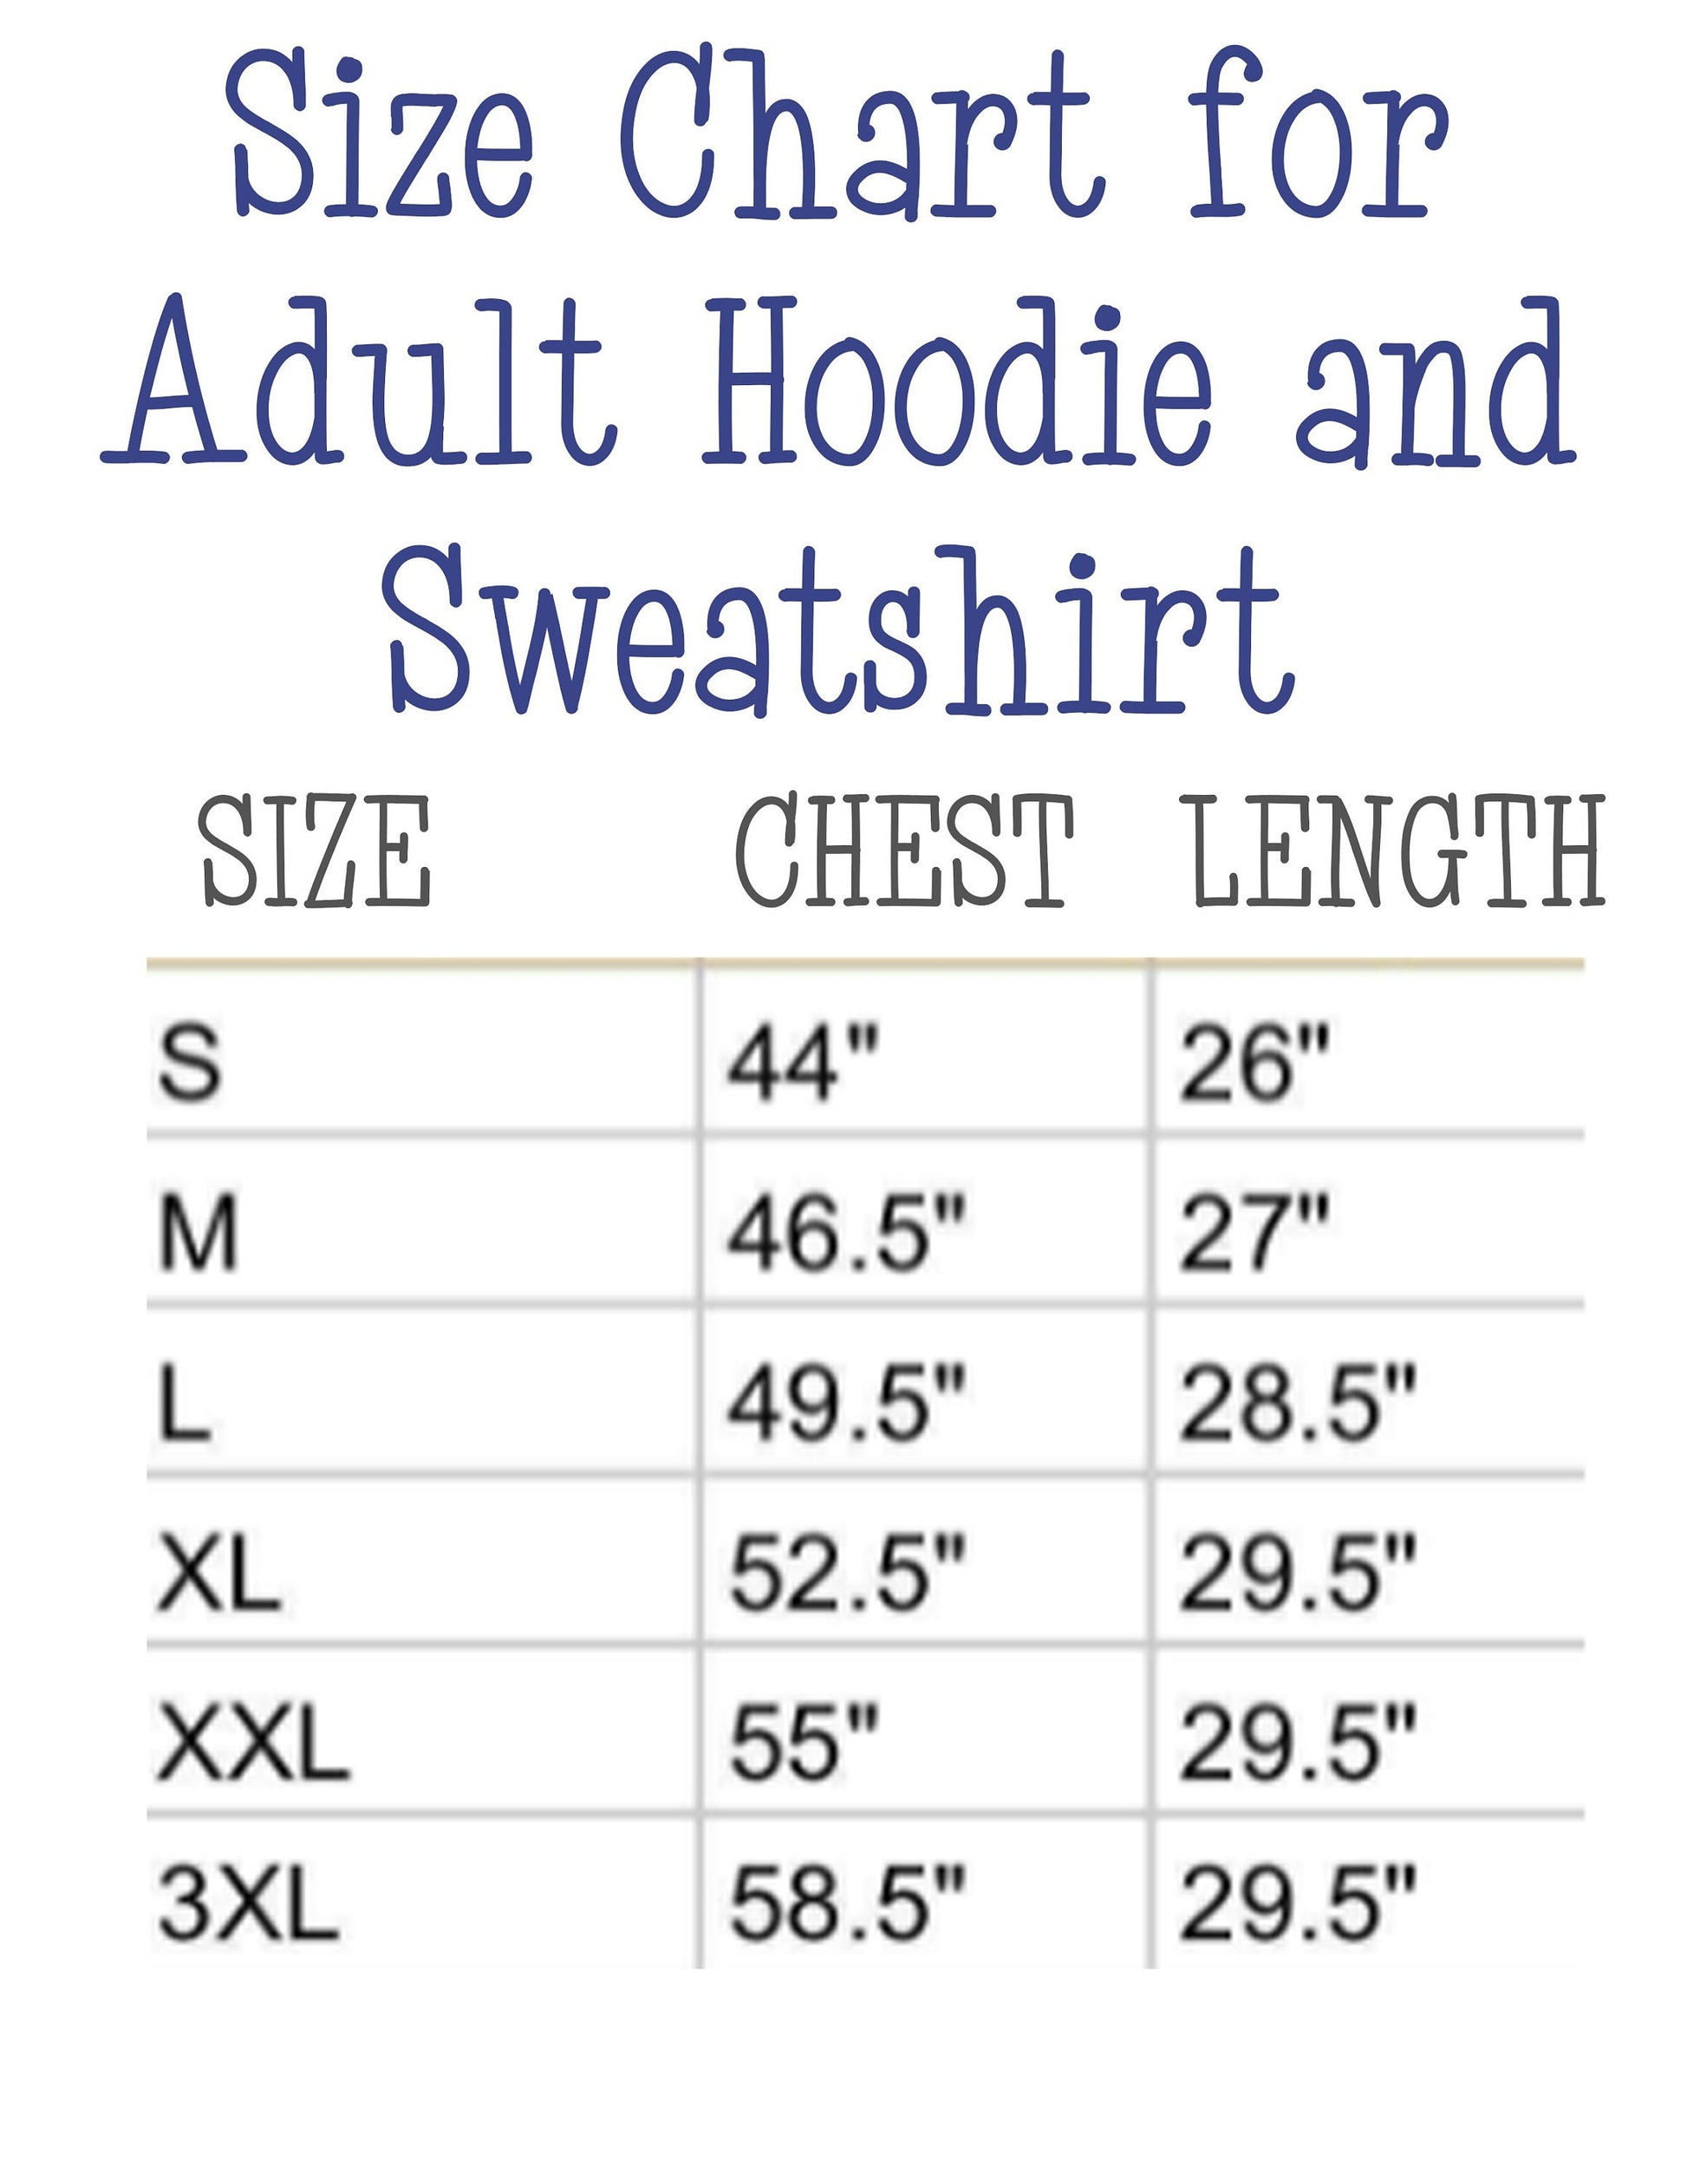 Sublimation Crewneck Sweatshirt Fleece Lined 100% Polyester- Kids